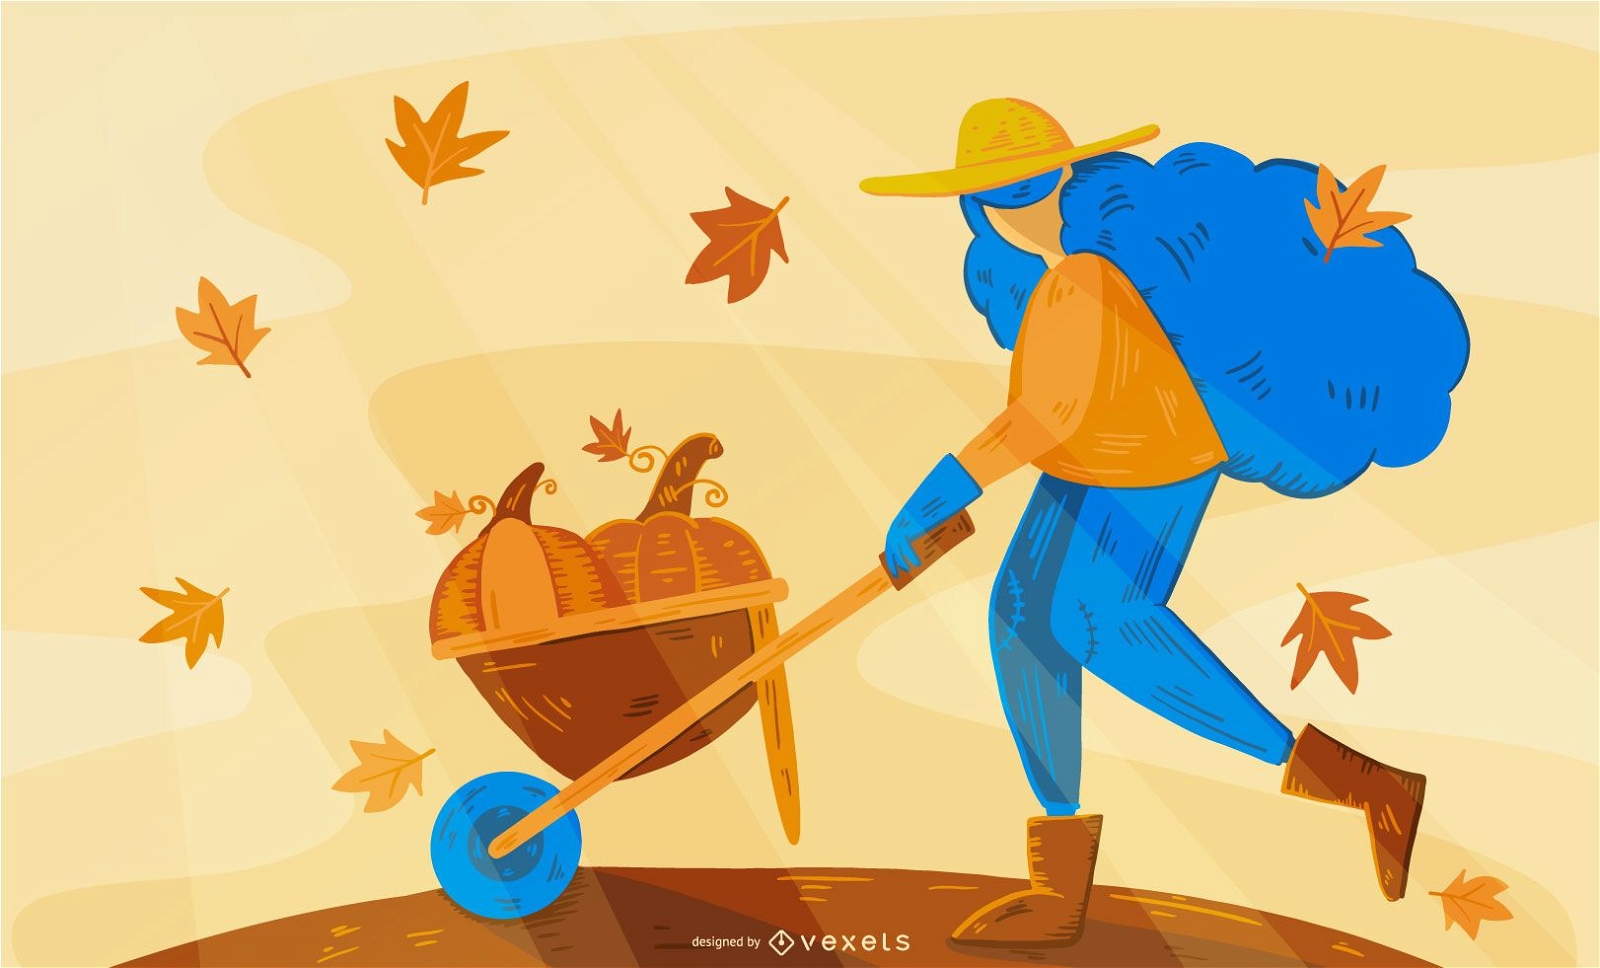 Autumn farmer illustration design